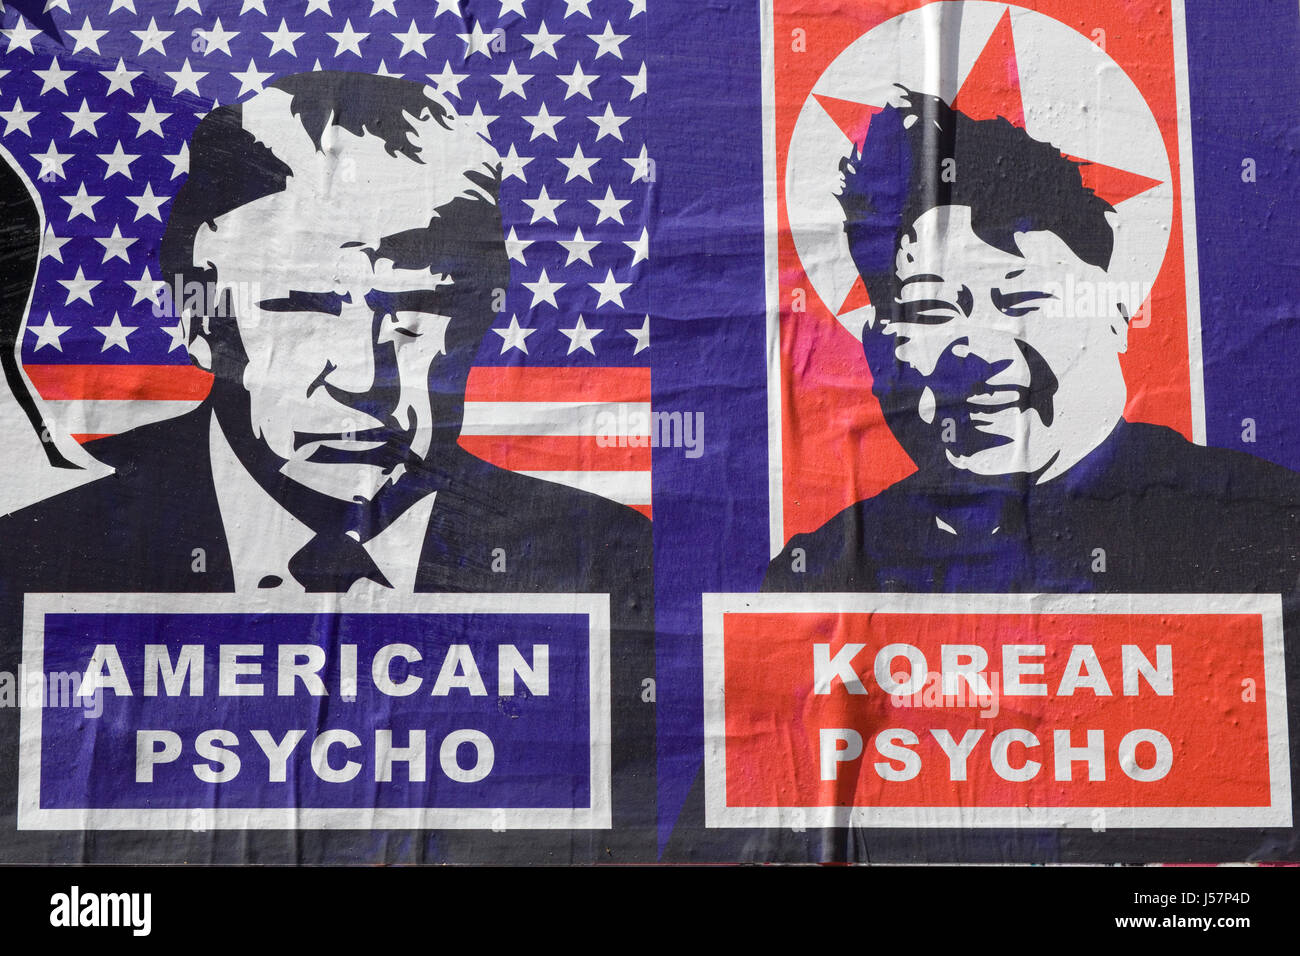 American Psycho et Psycho Coréen Donald Trump et Kim Jong-un poster Banque D'Images